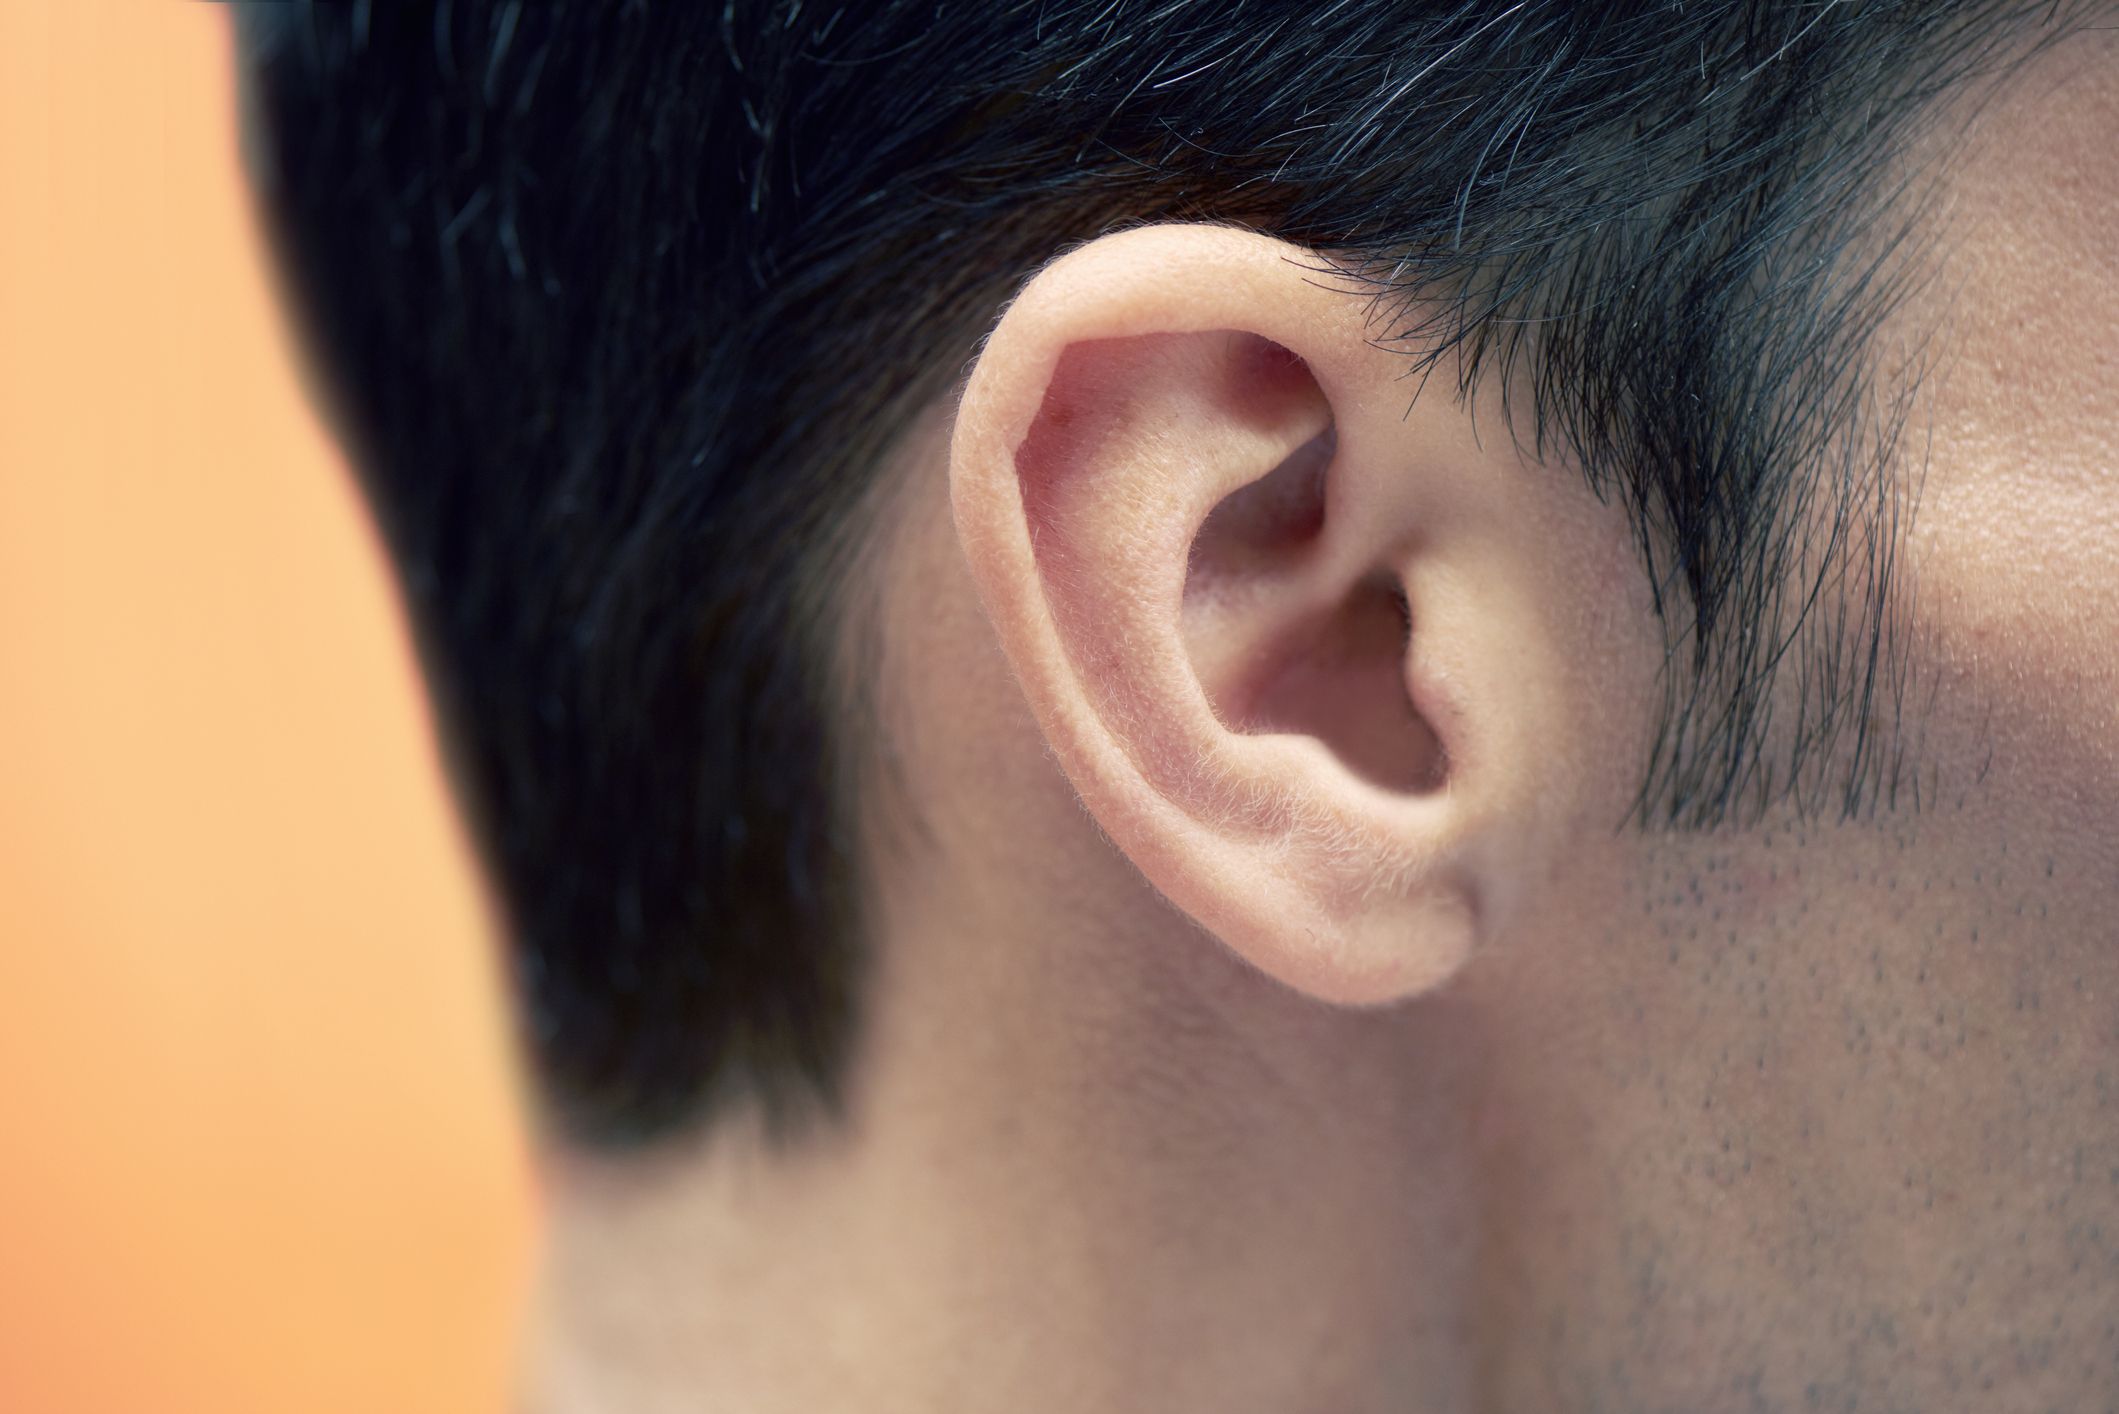 infected blackhead in ear